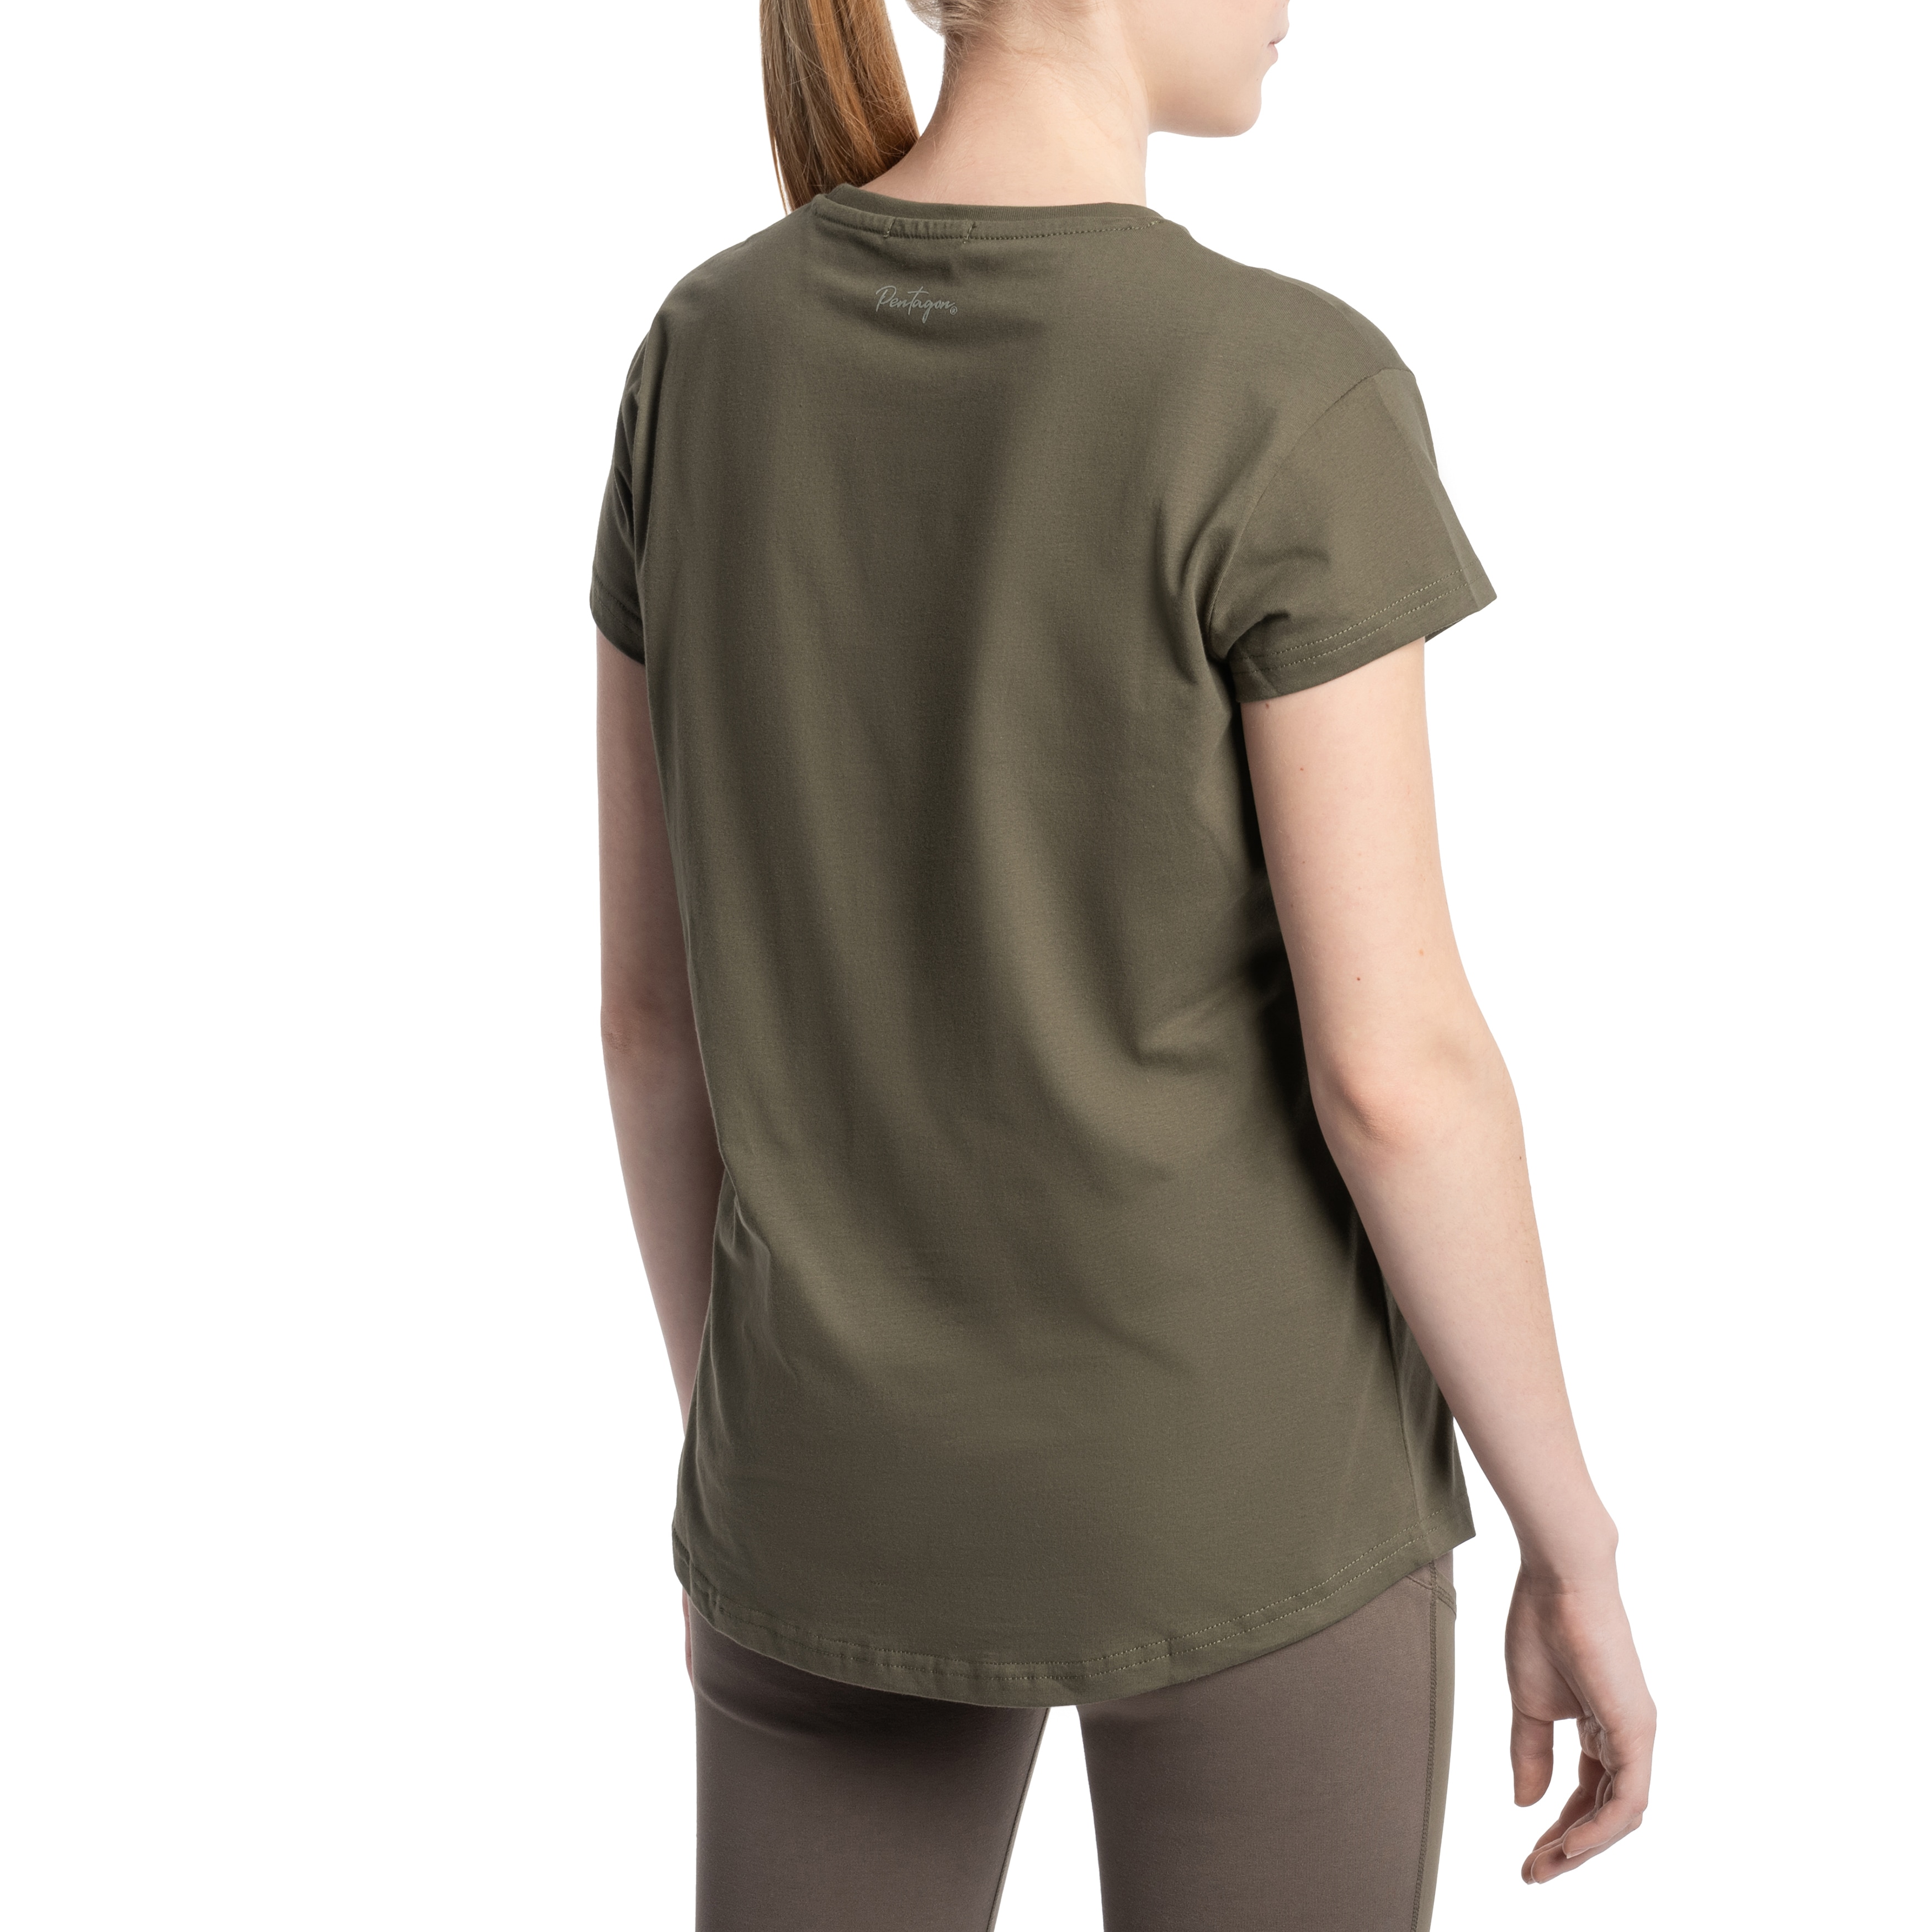 Koszulka T-shirt damska Pentagon Calligraphy - RAL 7013